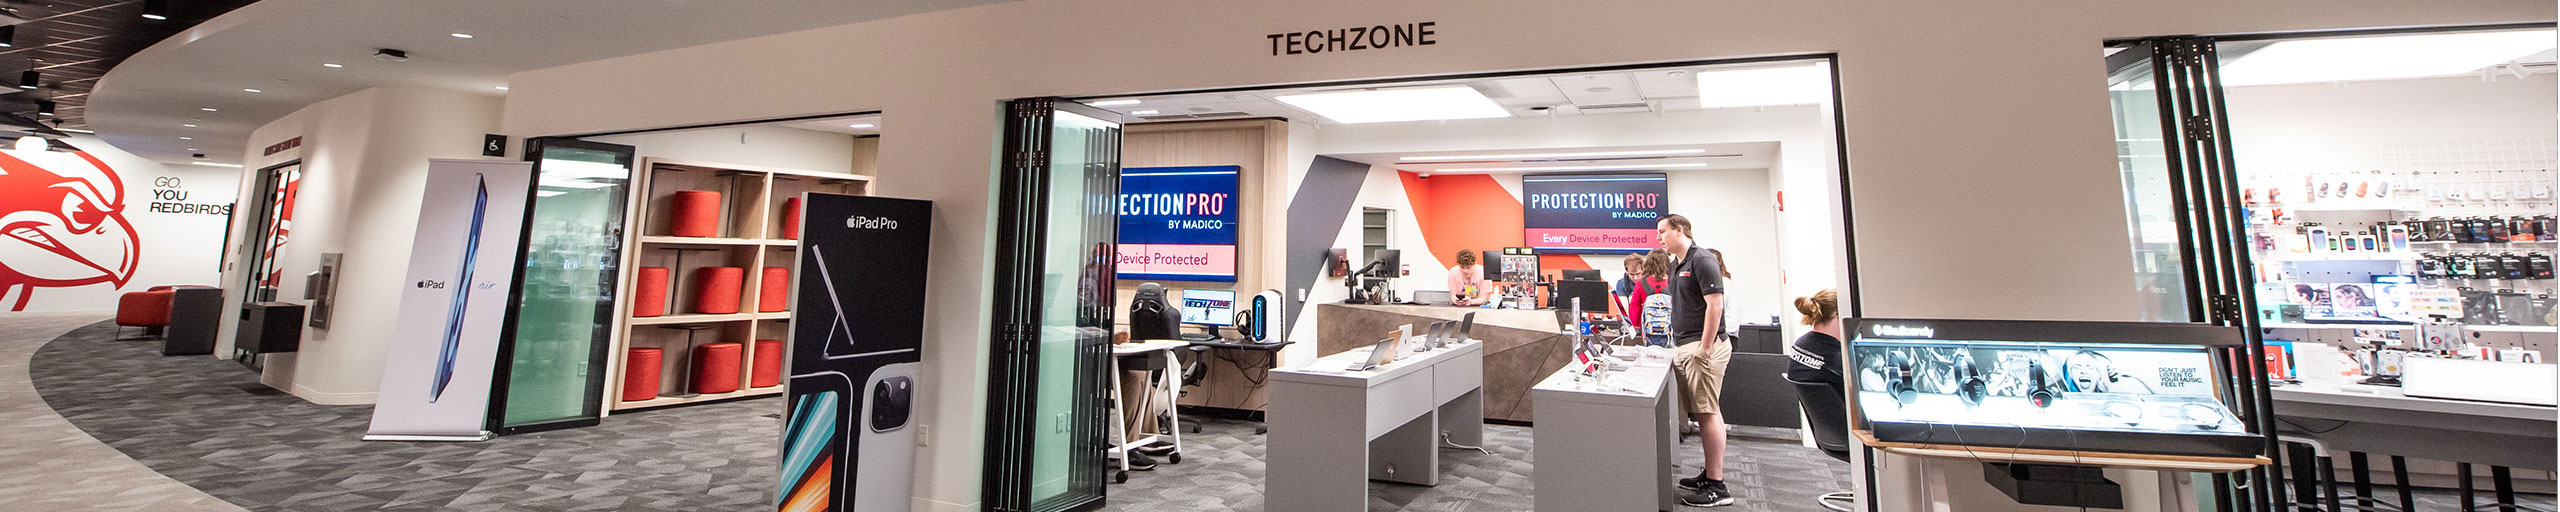 TechZone store entrance